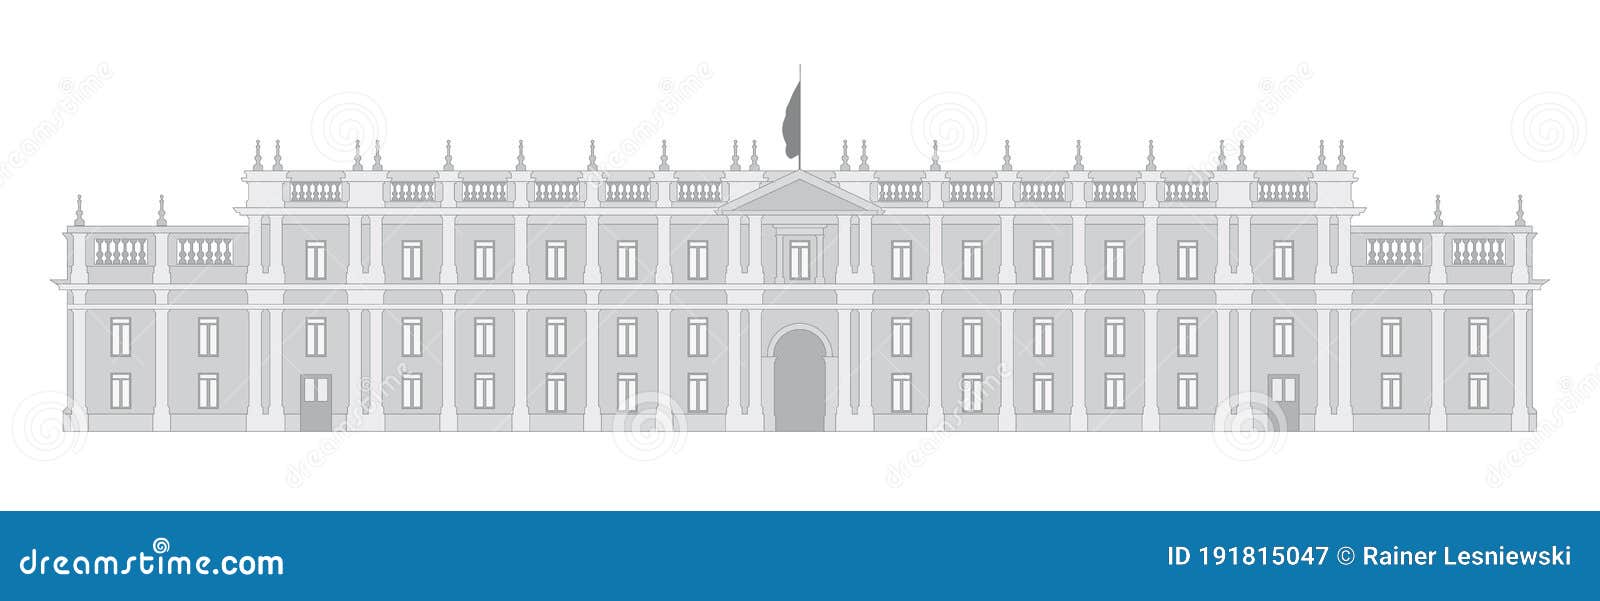  graphic of the chilean presidential palace la moneda in santiago